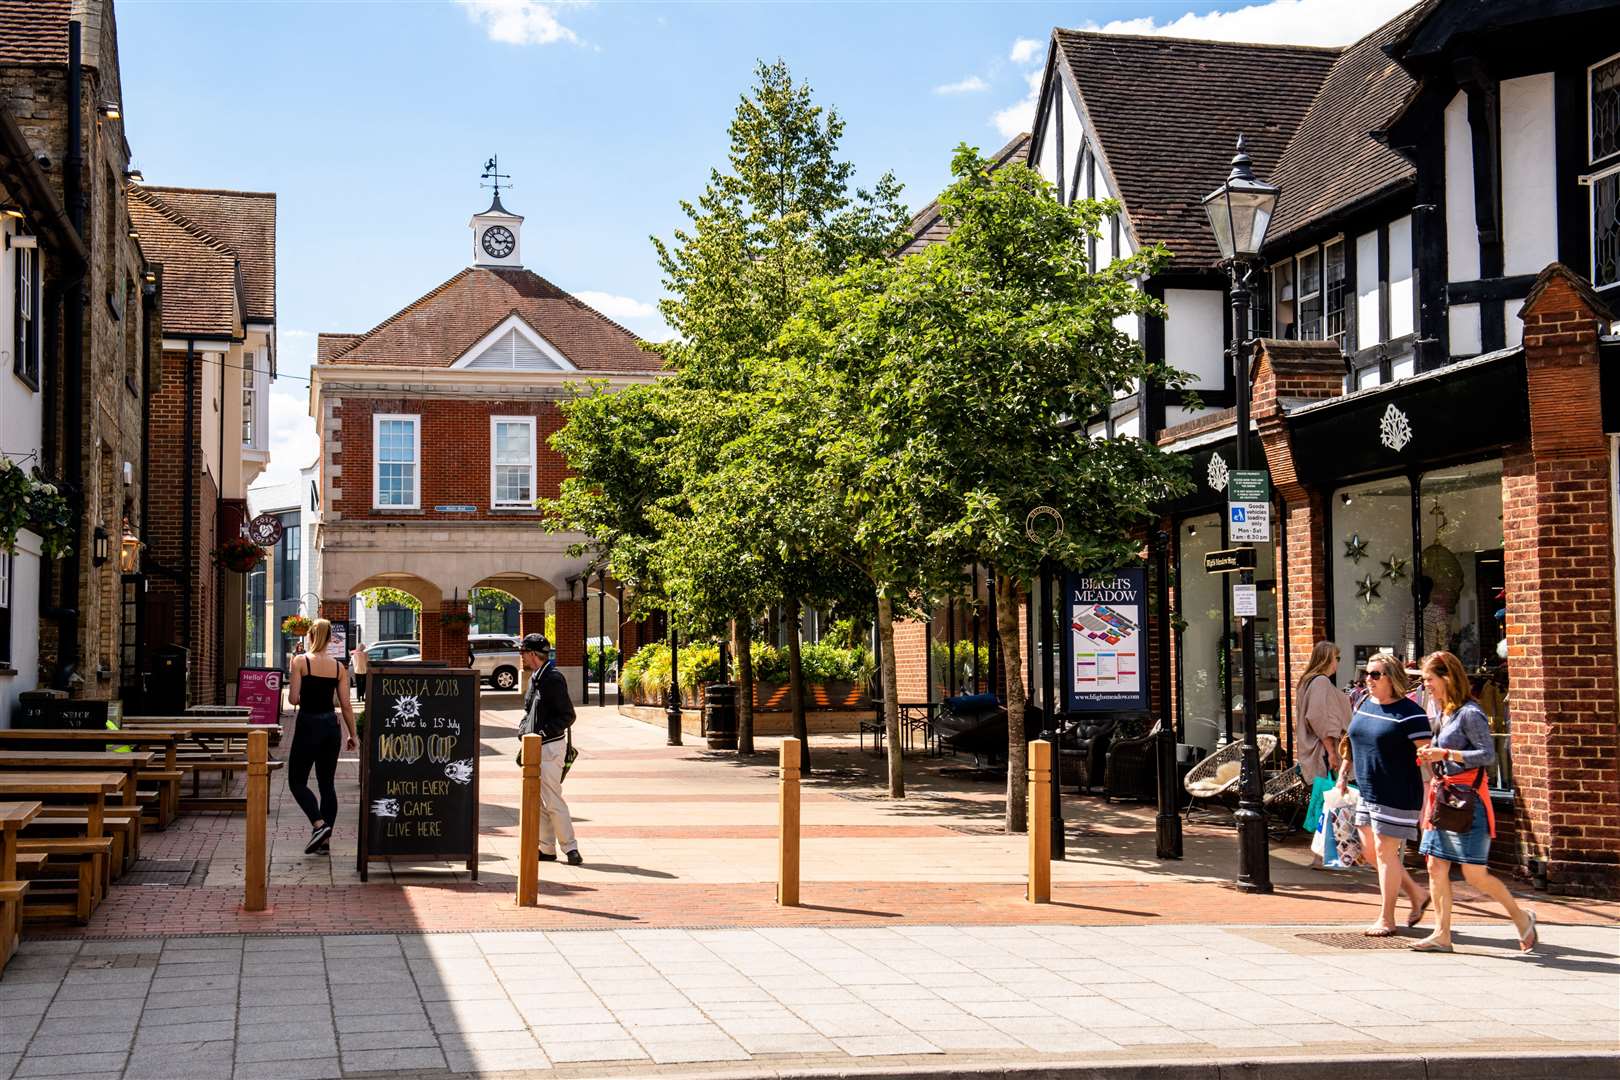 Sevenoaks town centre is described as 'lively'. Picture: Sevenoaks District Council